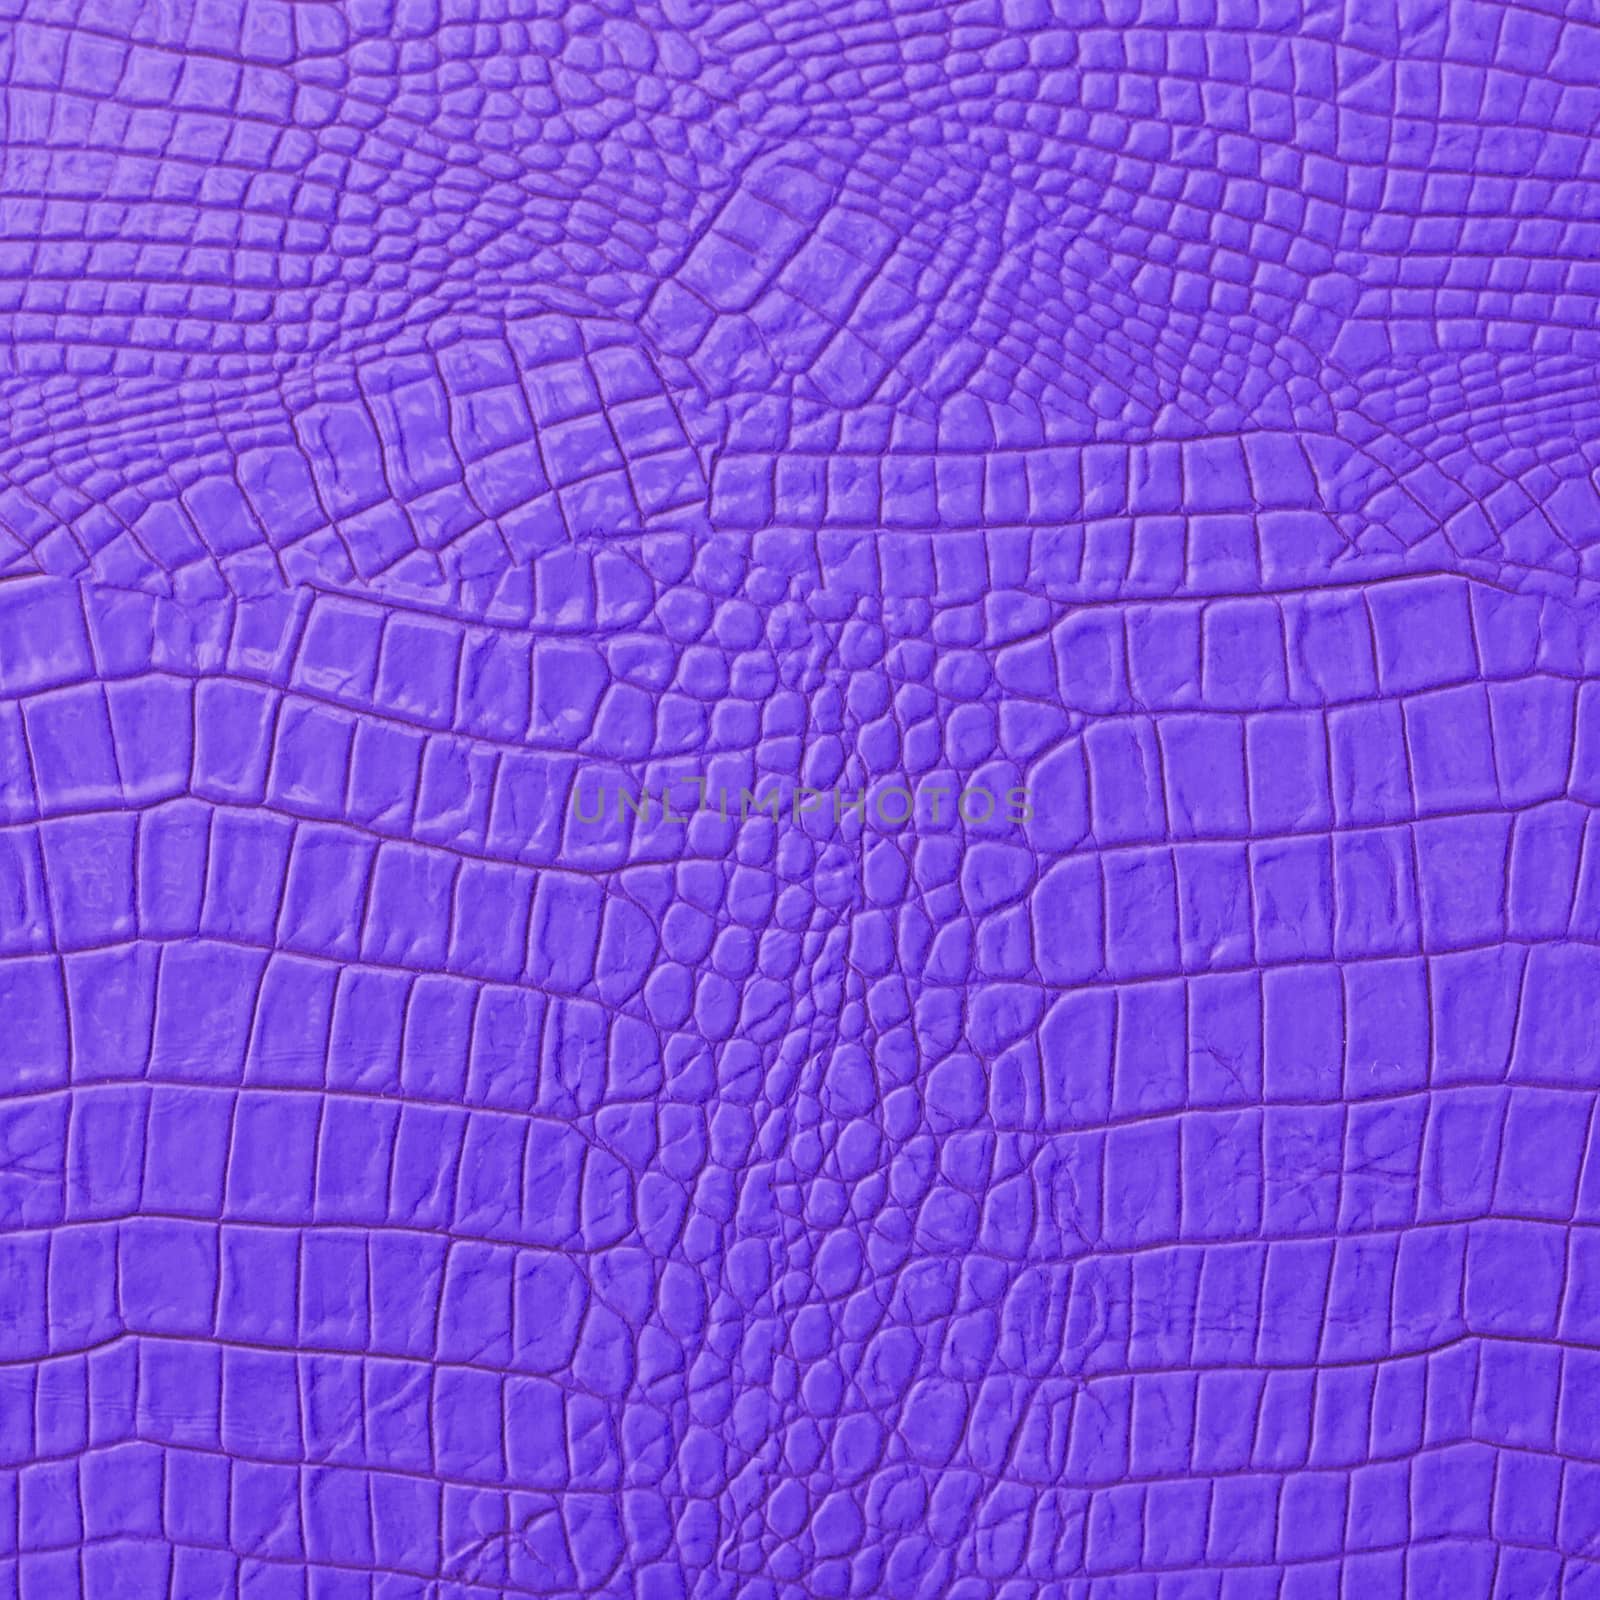 Purple Leather by 2nix